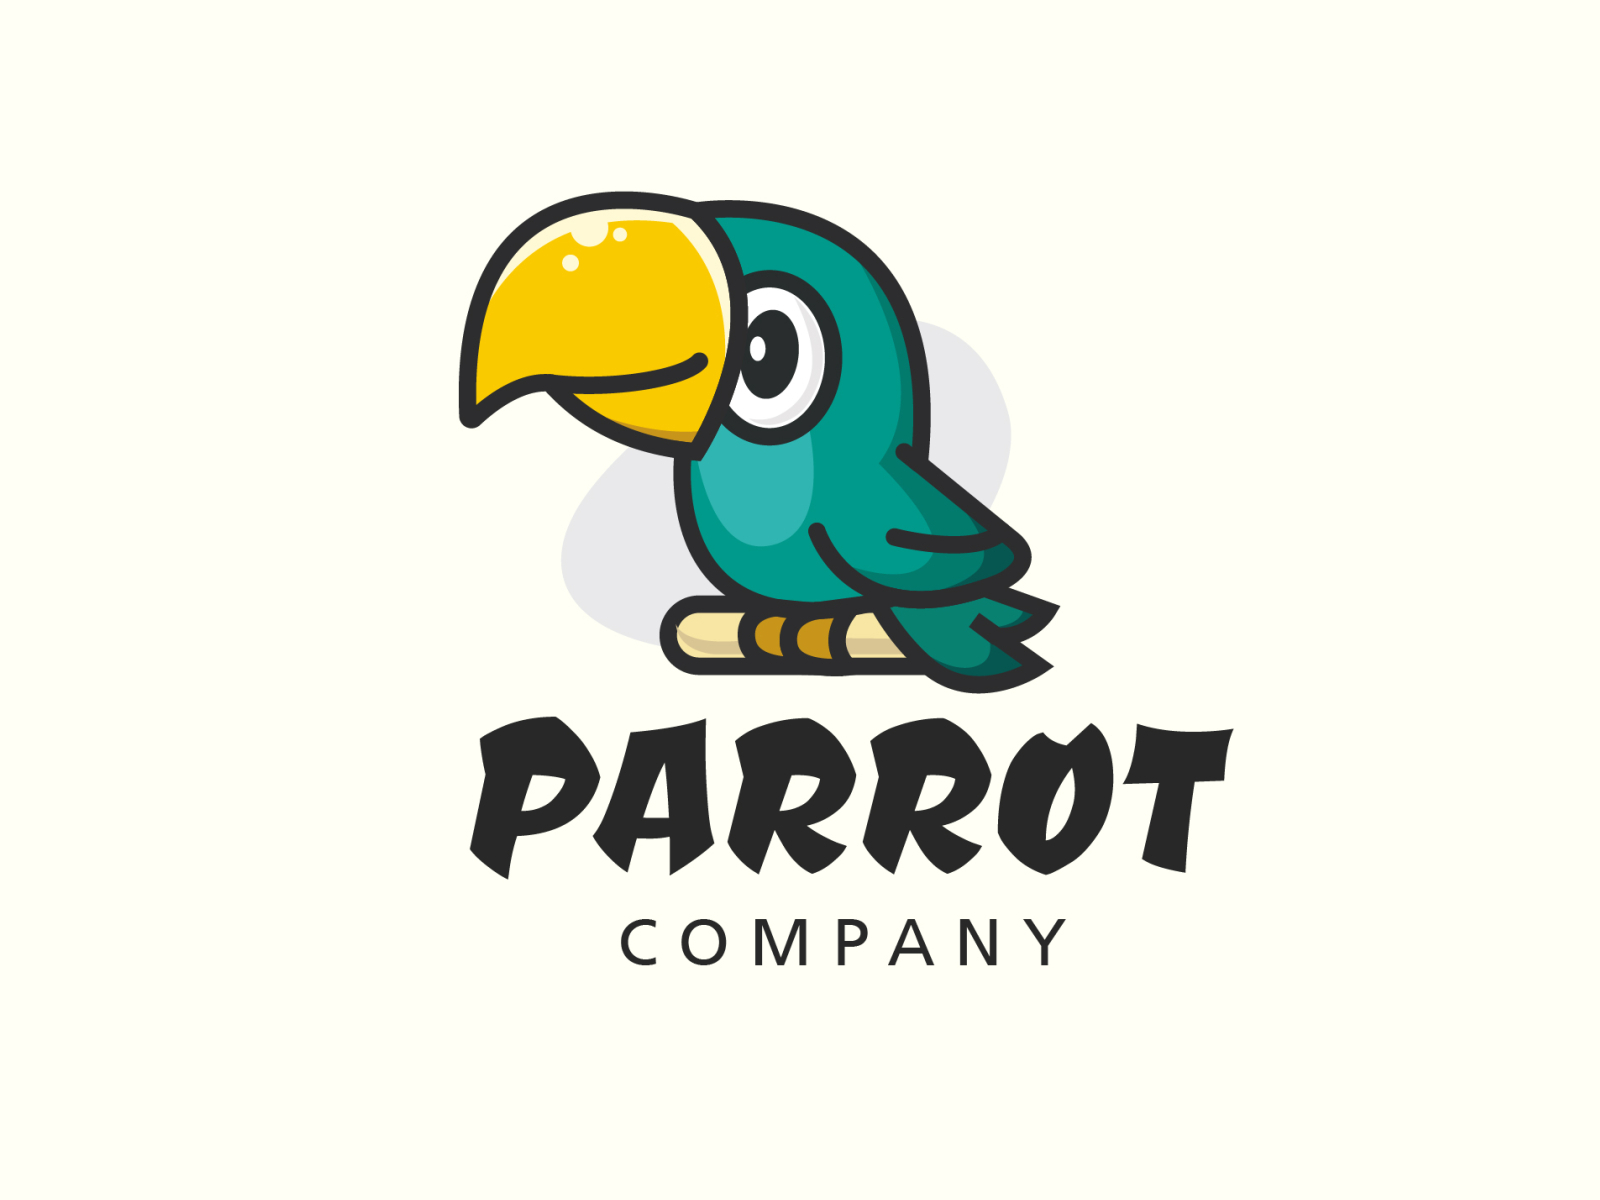 Parrot store logo / parrot logo / Bird logo Template | PosterMyWall